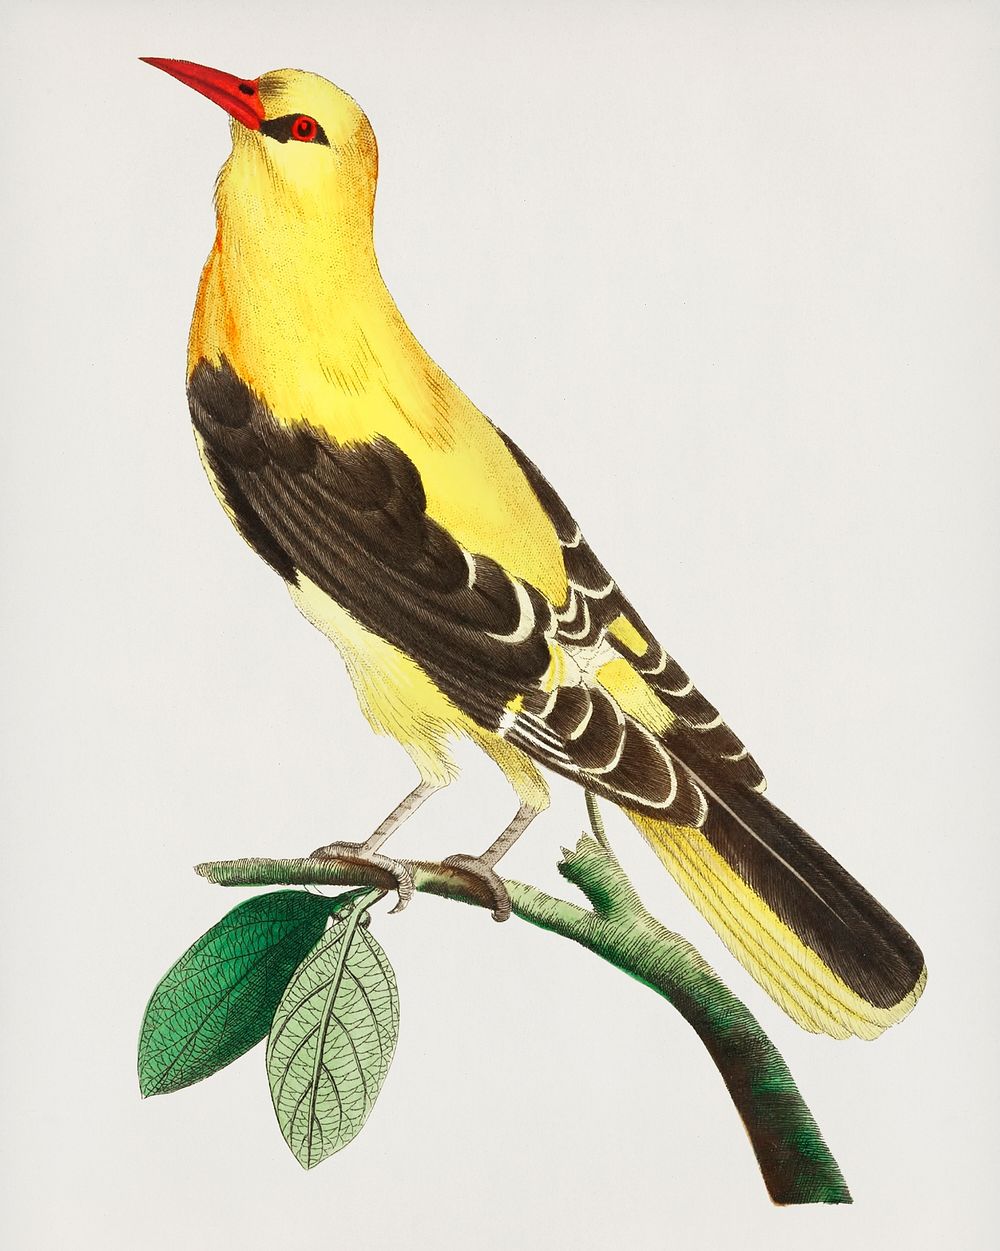 Vintage illustration of Golden Oriole or Golden thrush